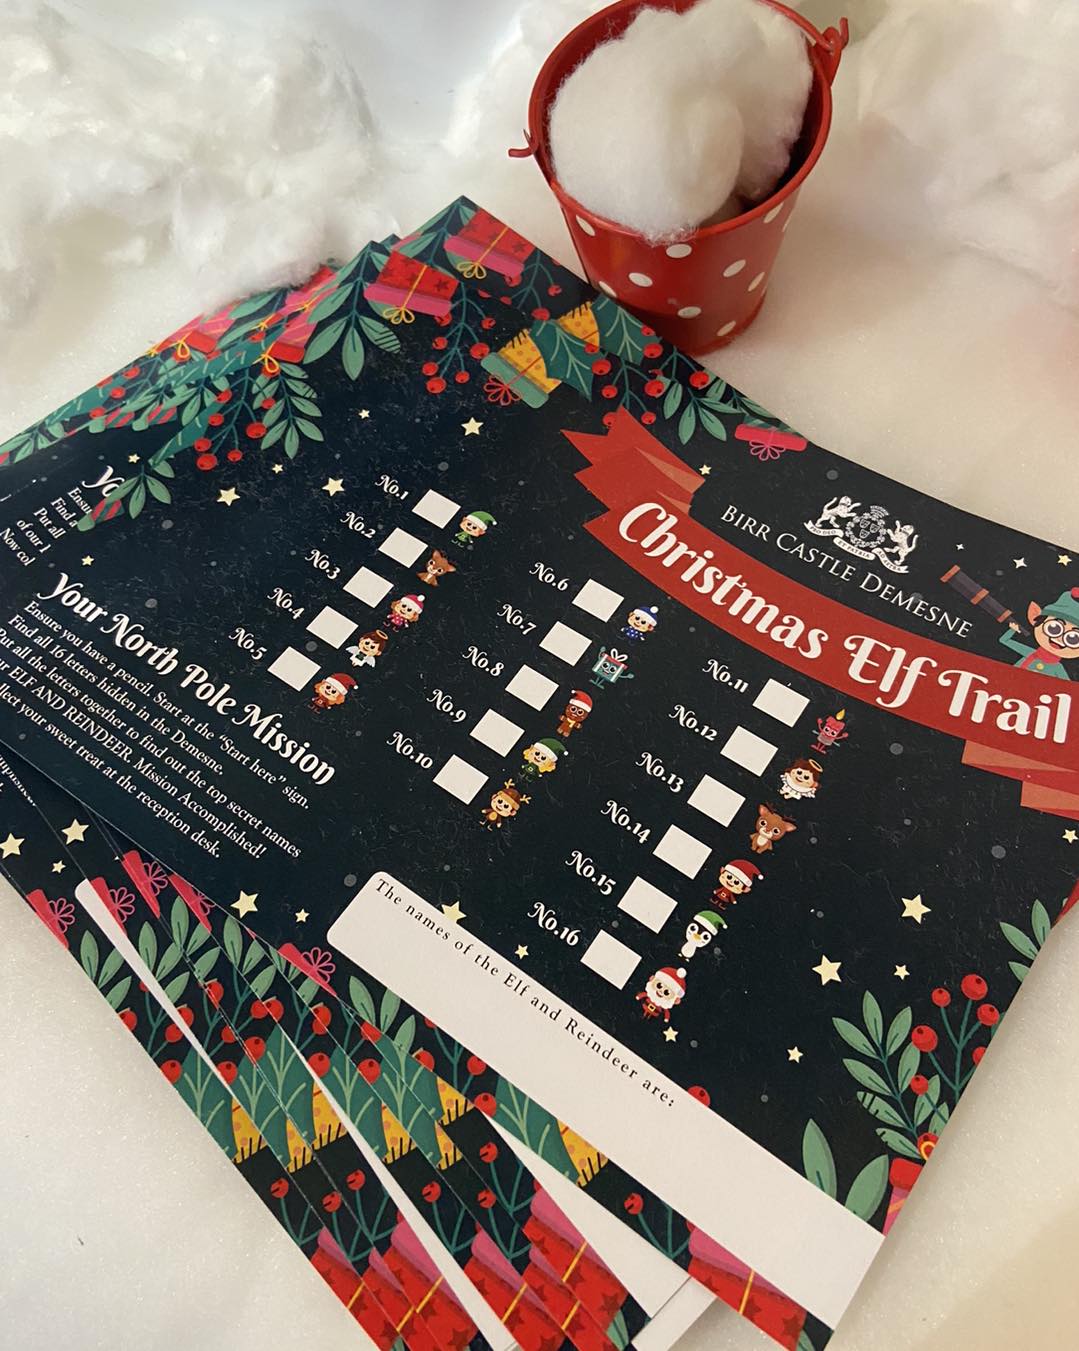 The Christmas Elf Trail